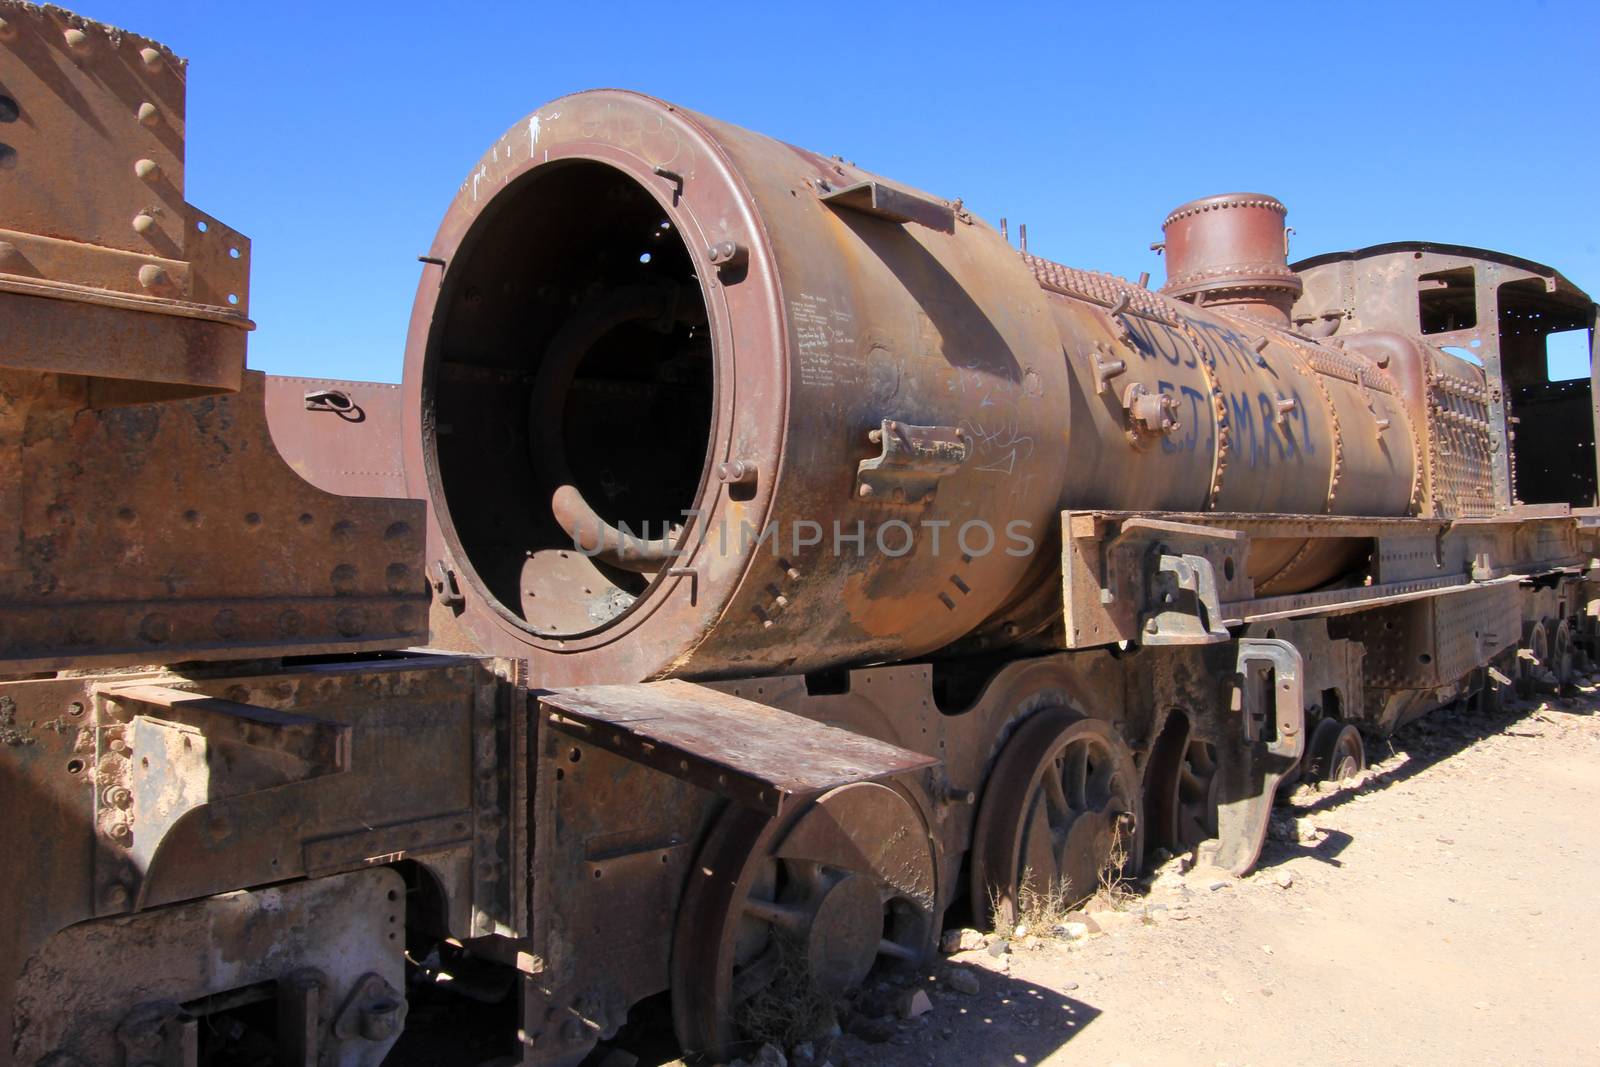 Graveyard of rusty old trains in the desert of Uyuni, Bolivia